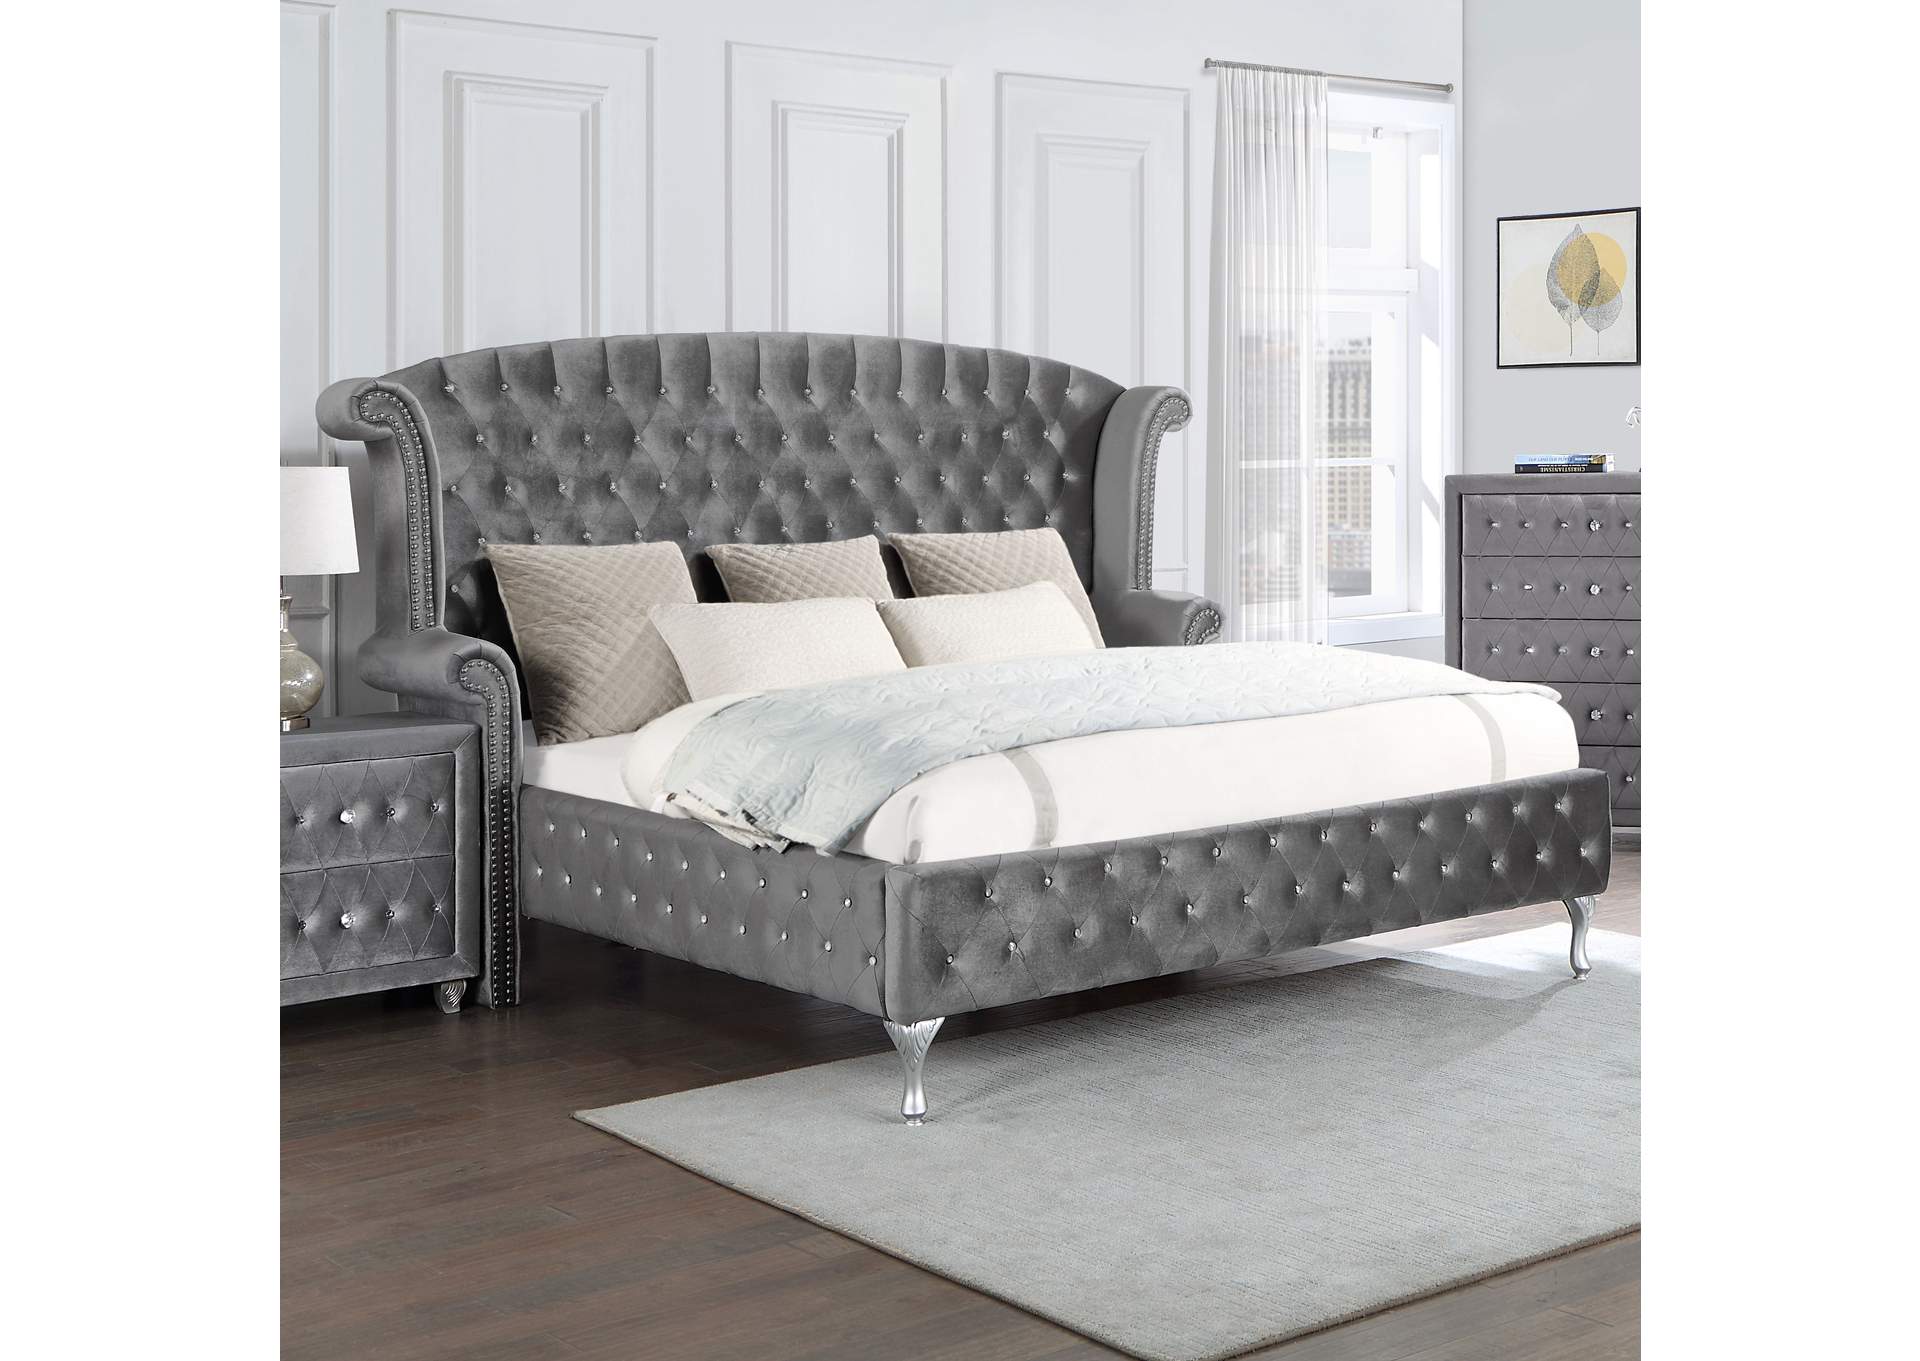 Deanna Eastern King Tufted Upholstered Bed Grey,Coaster Furniture